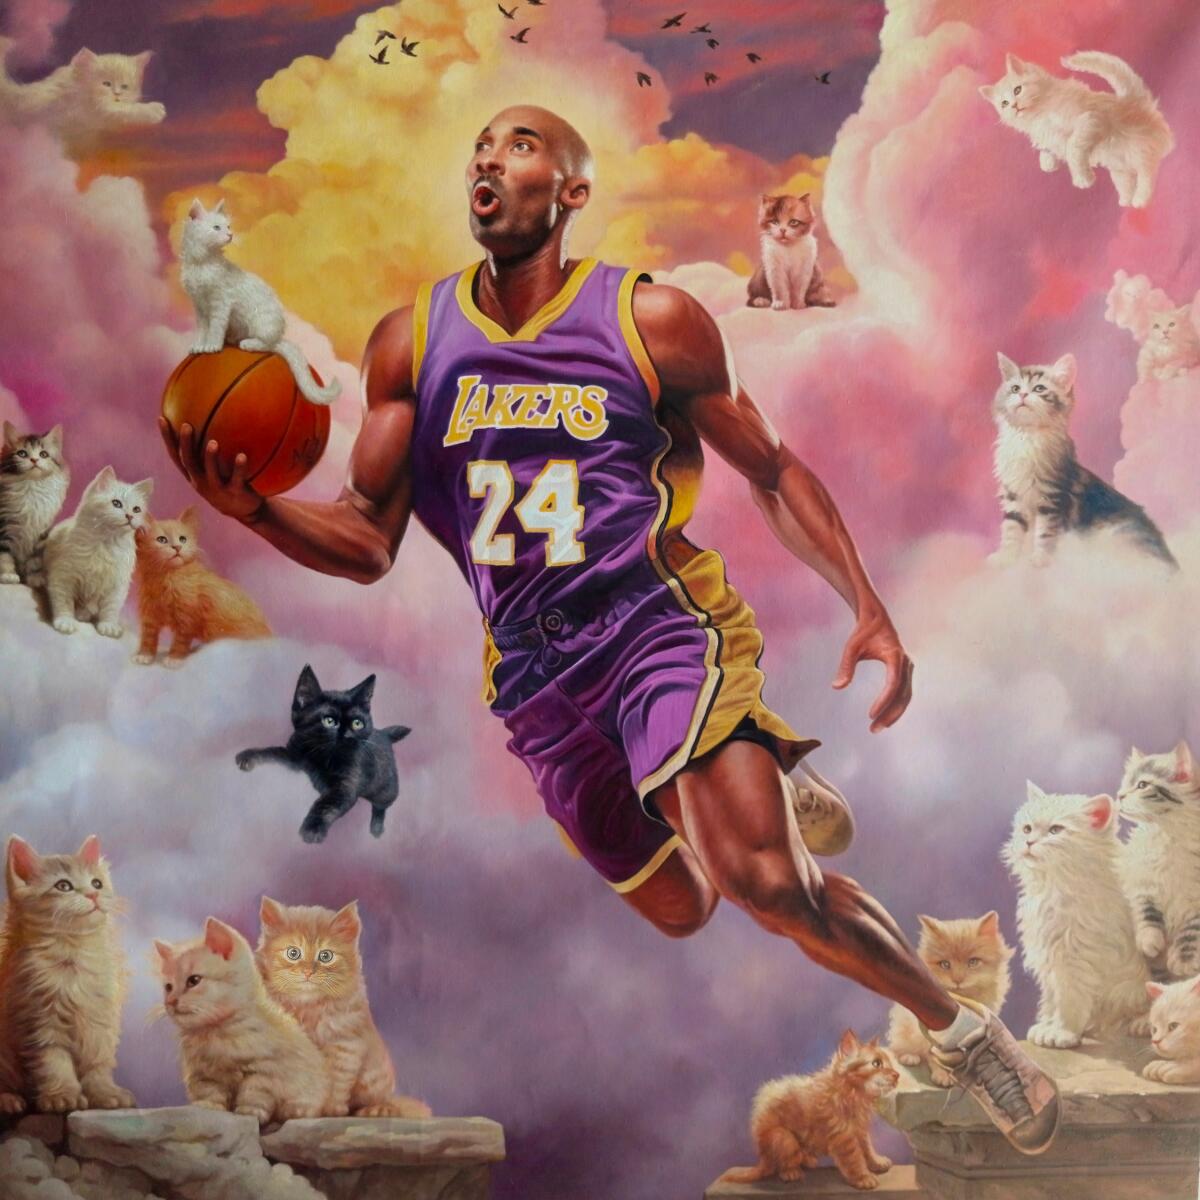 Artworks showing Kobe Bryant entering a kingdom of kittens.